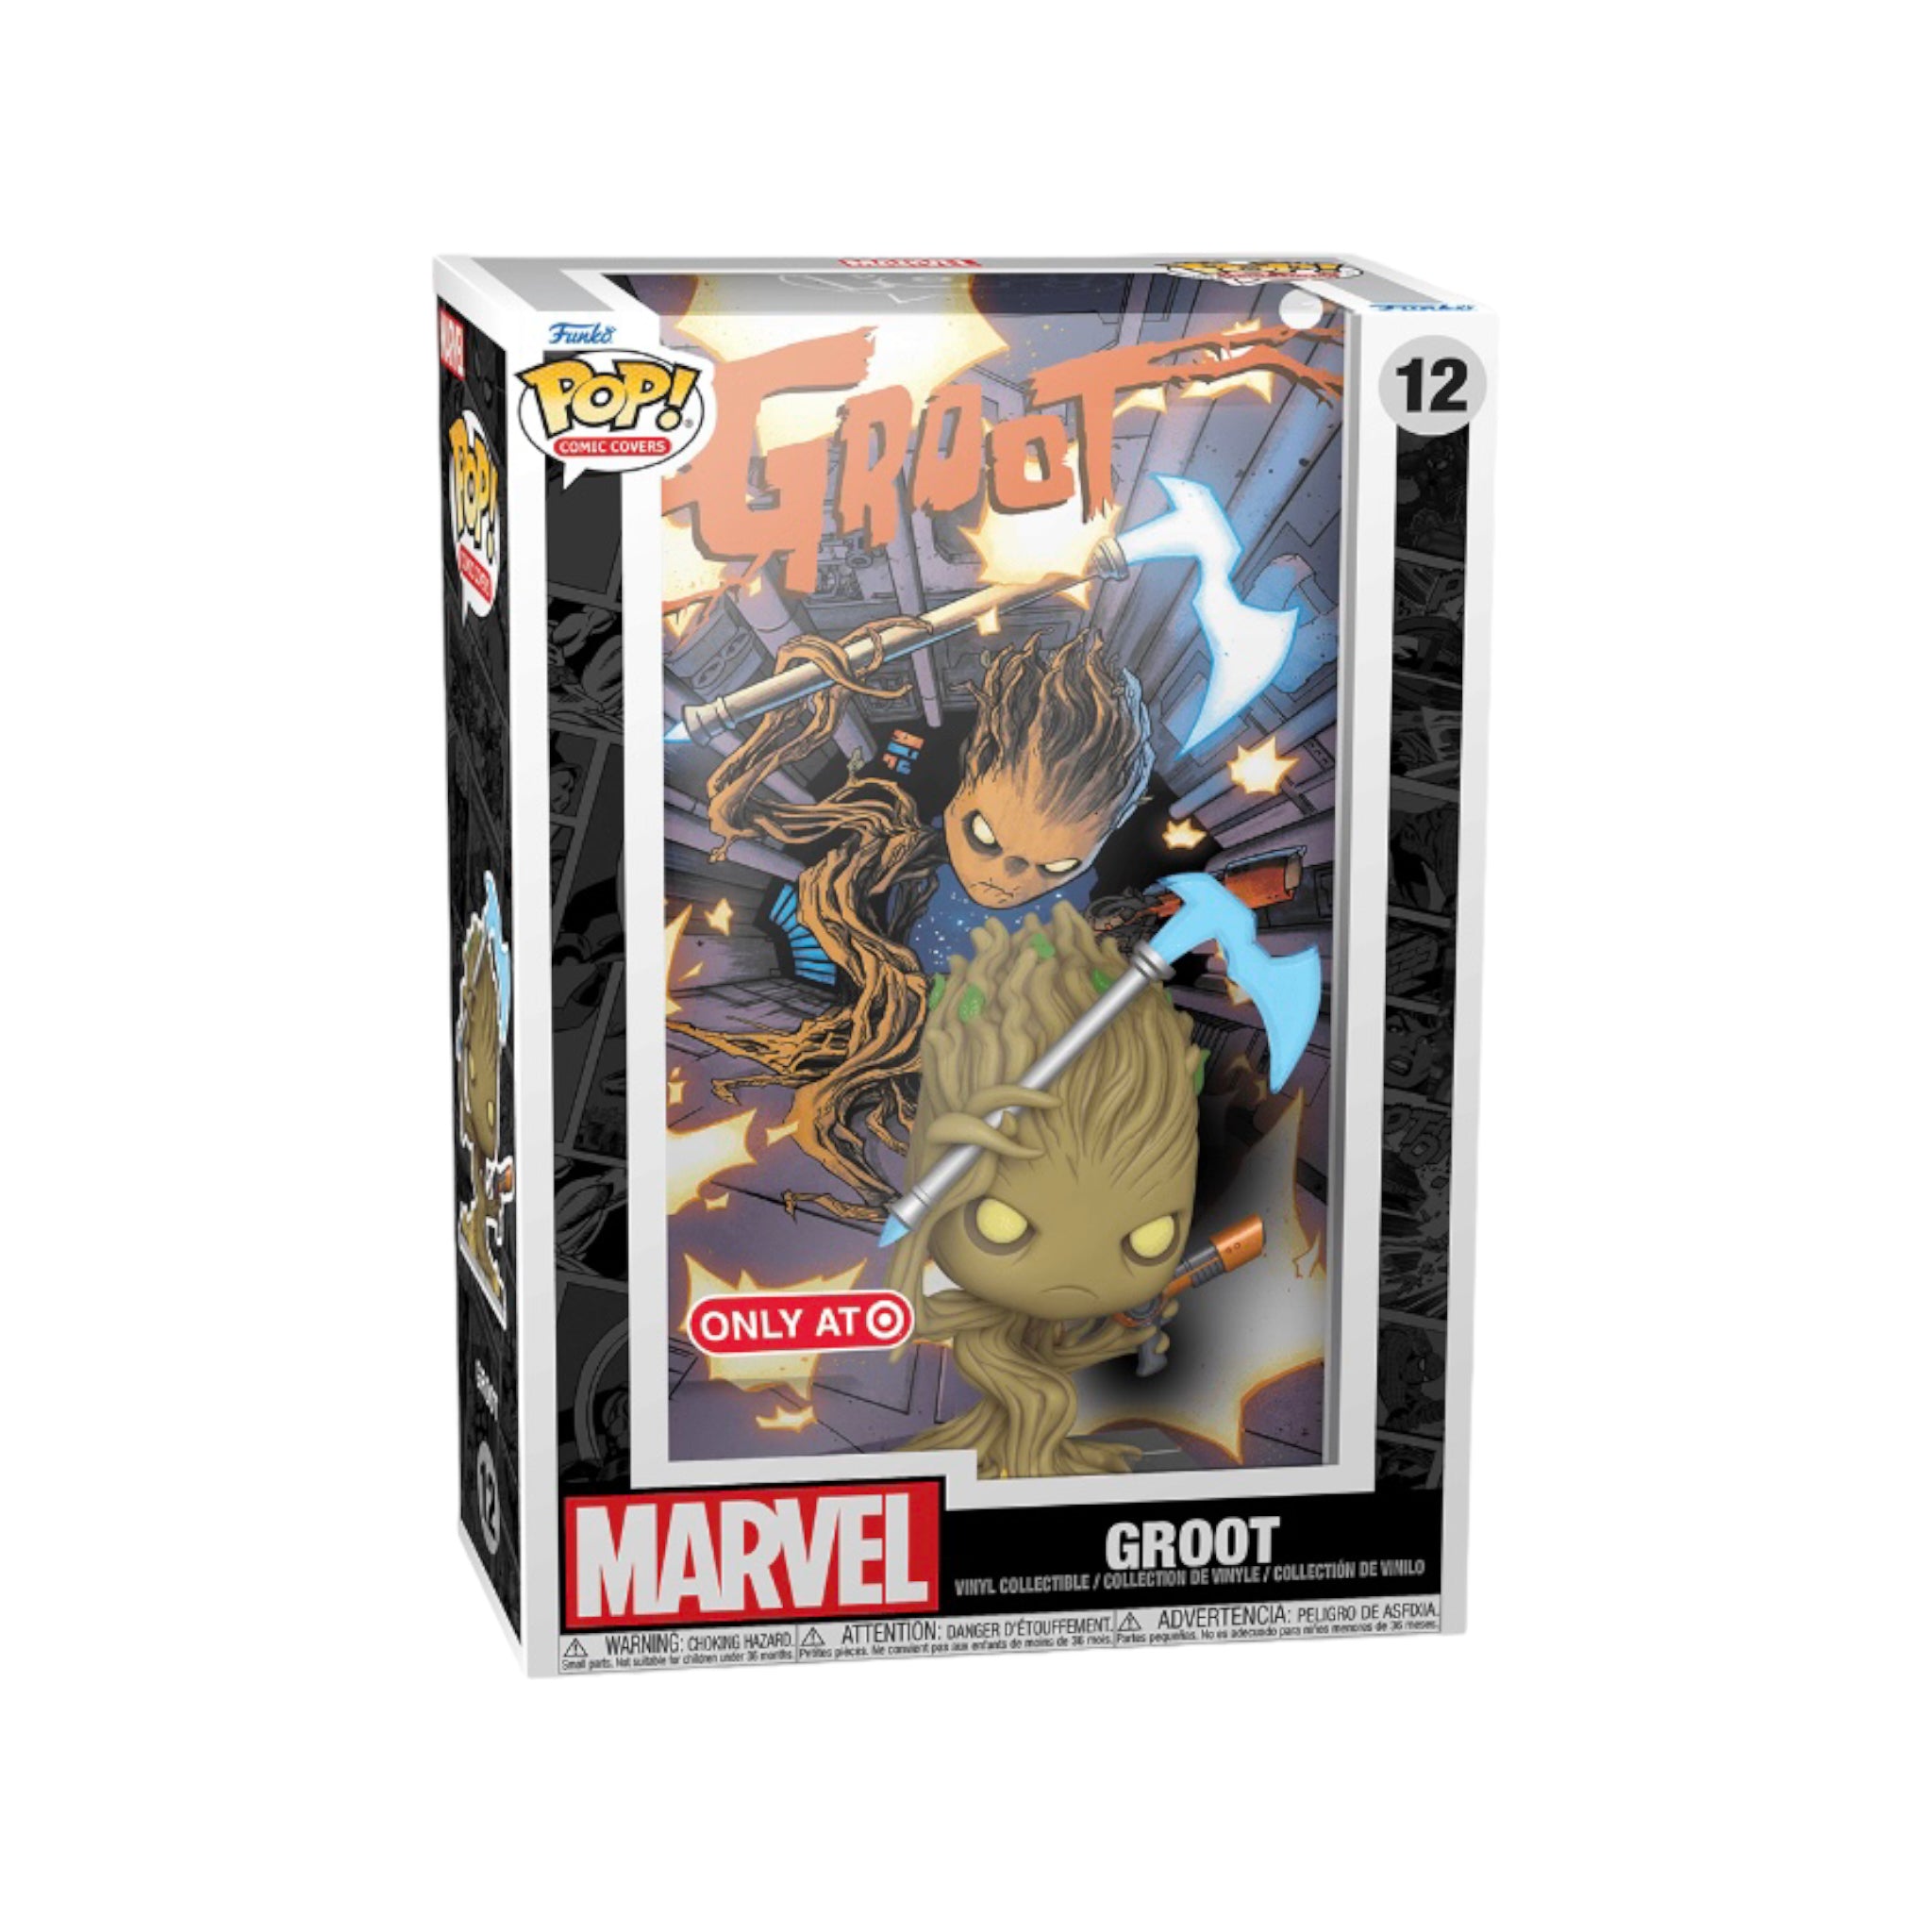 Groot #12 Funko Pop Comic Cover! - Marvel - Target Exclusive